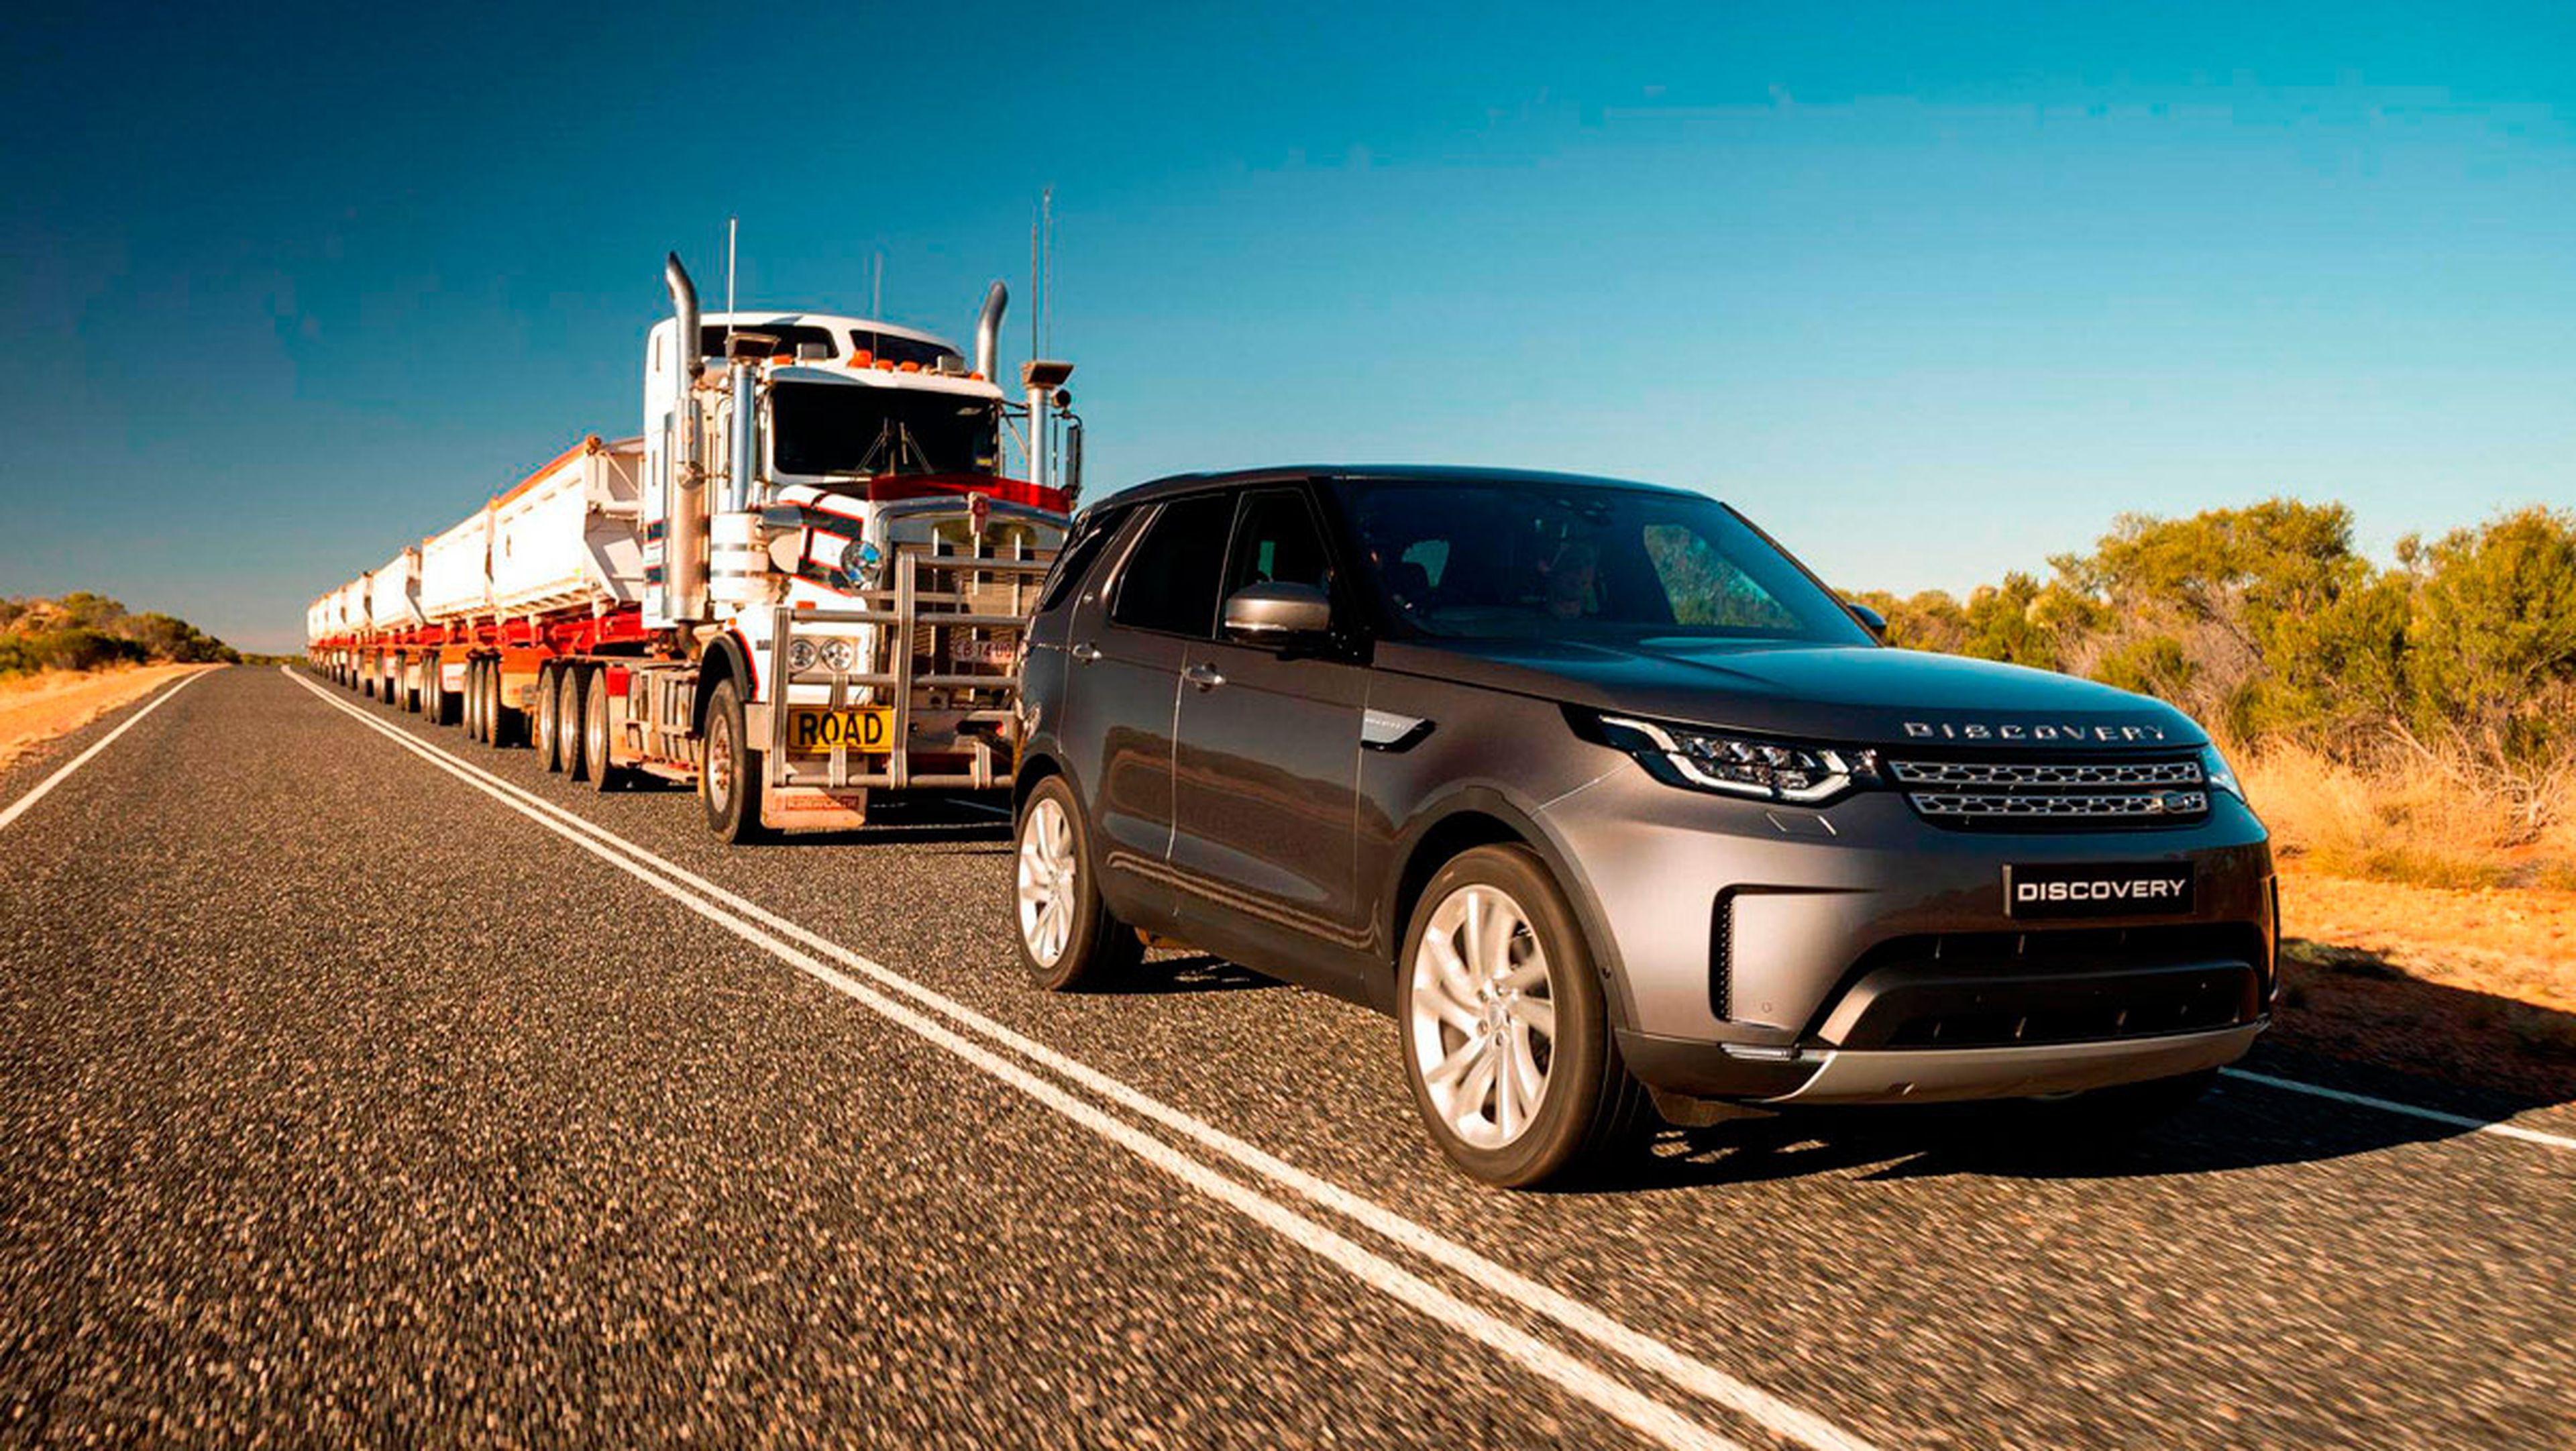 Land Rover Discovery tirando de un convoy de carretera (I)